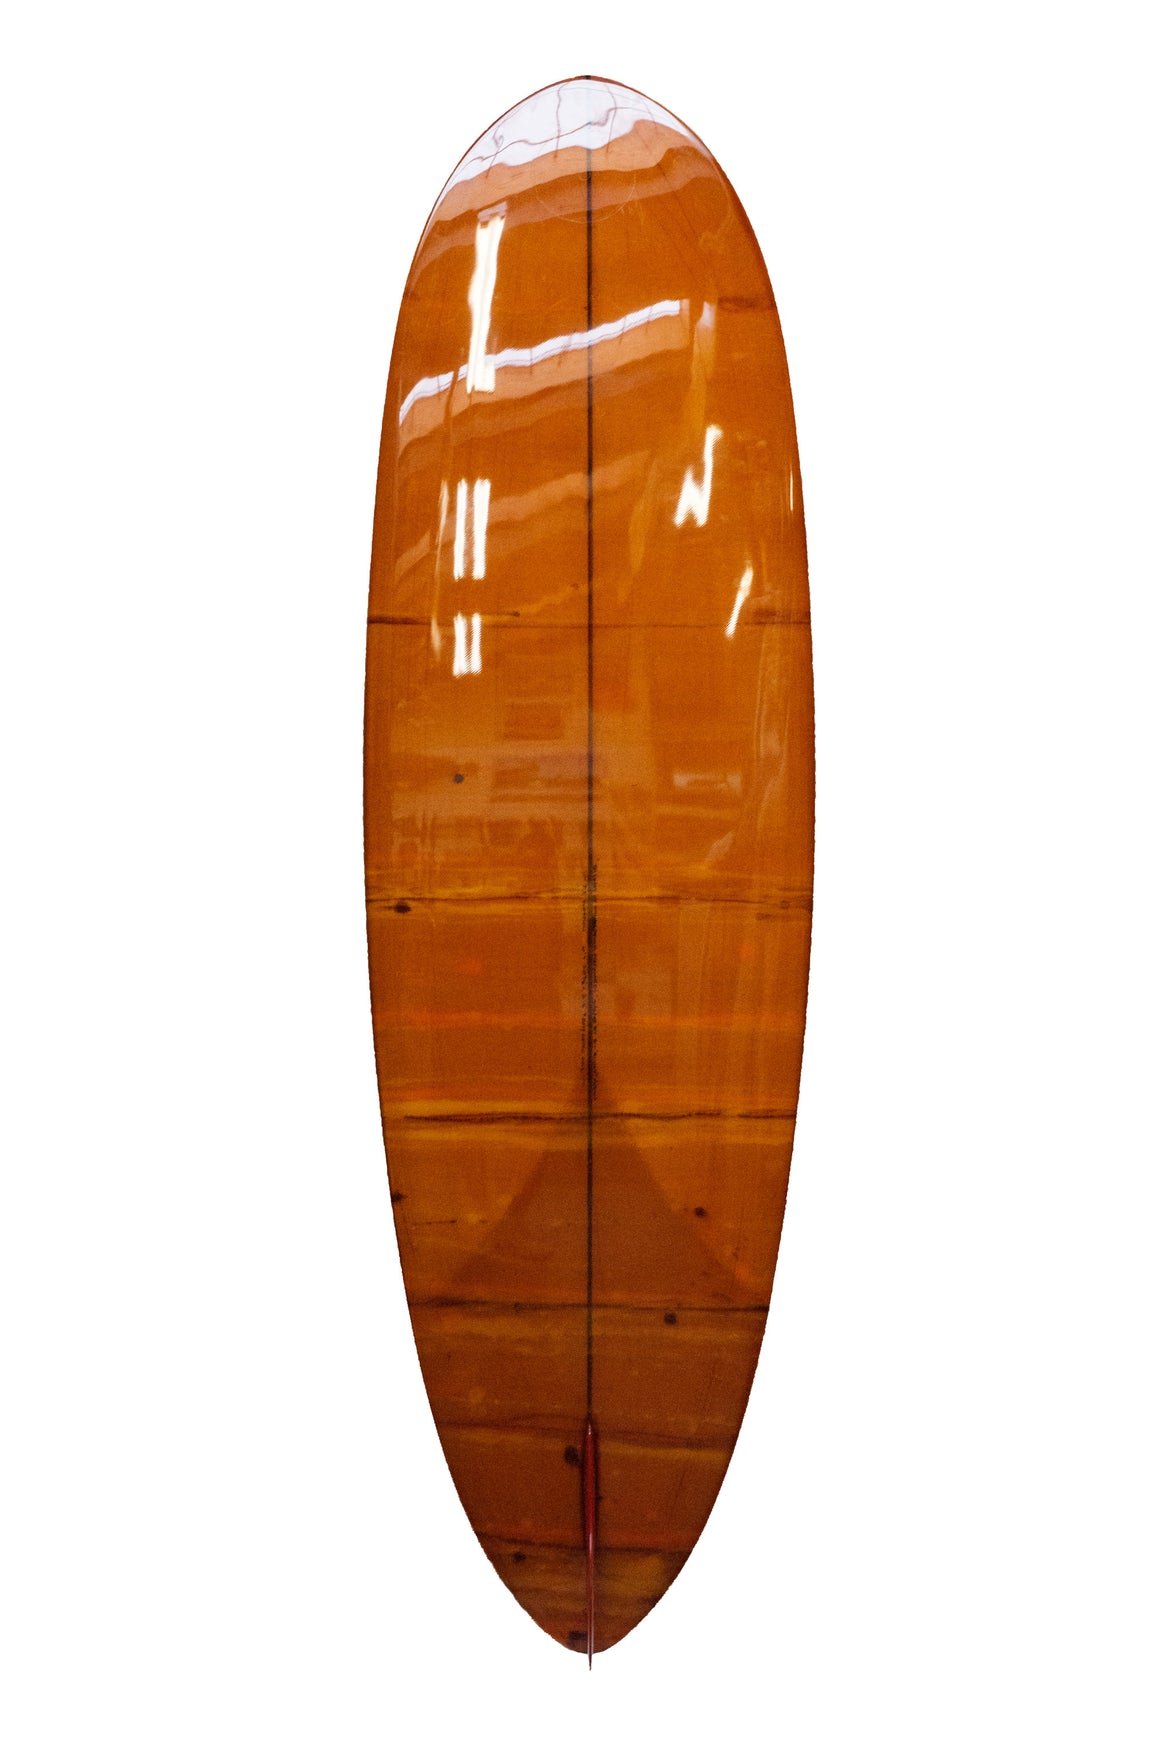 William Dennis Custom "Scorpian" Shortboard - Ventura Surf Shop